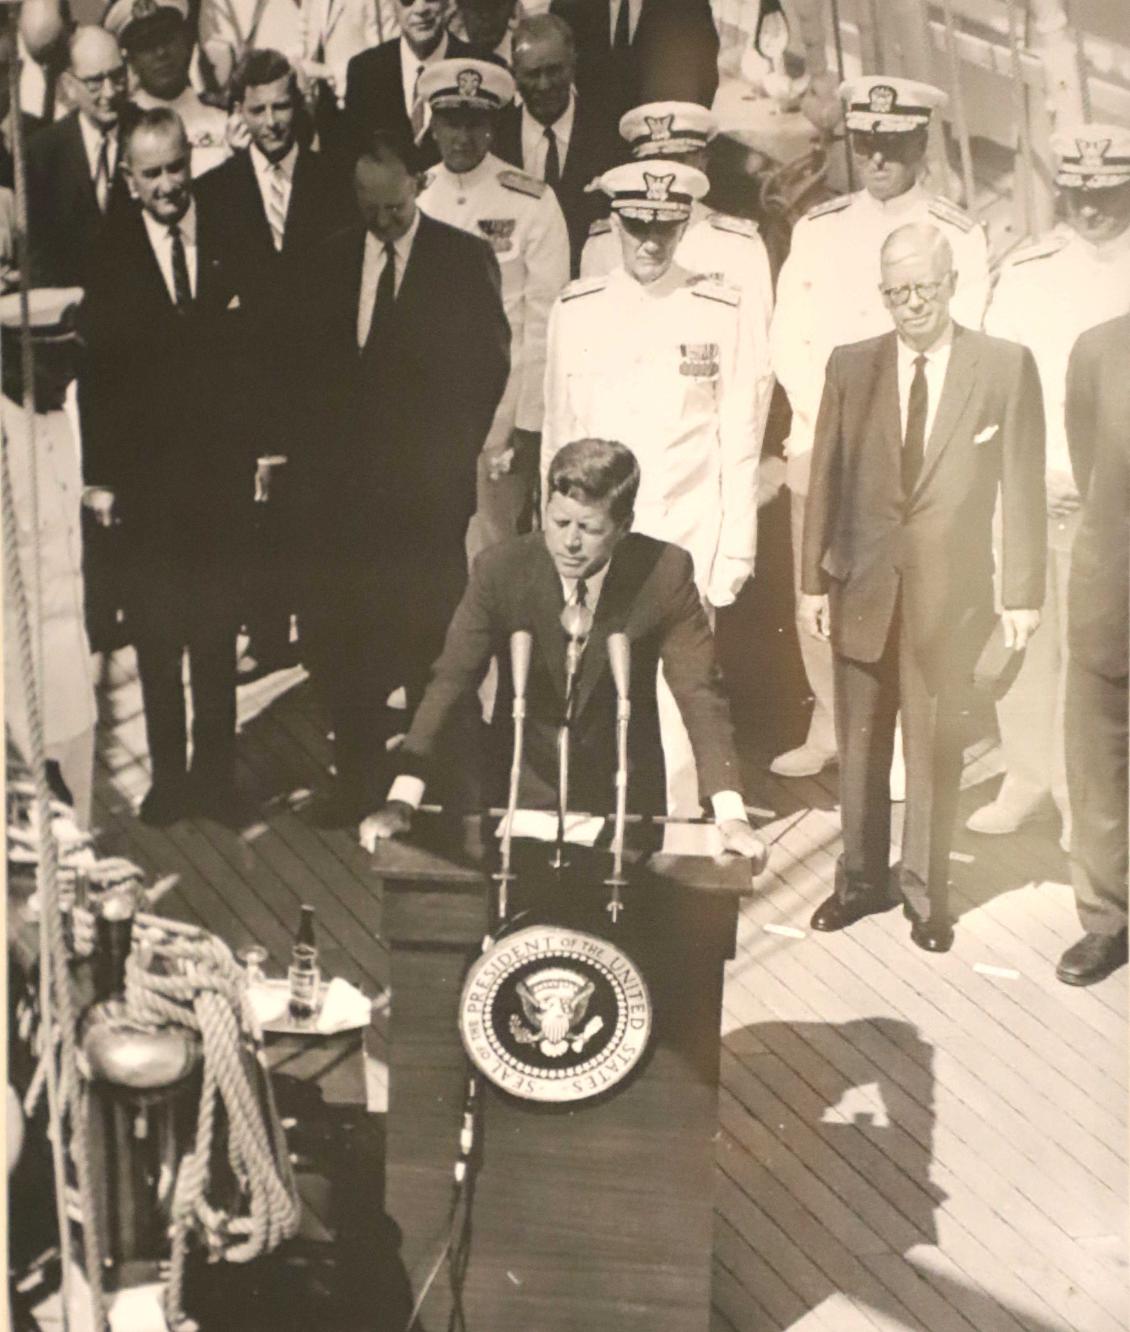 Coast Guard Cutter Eagle - President John F Kennedy on board